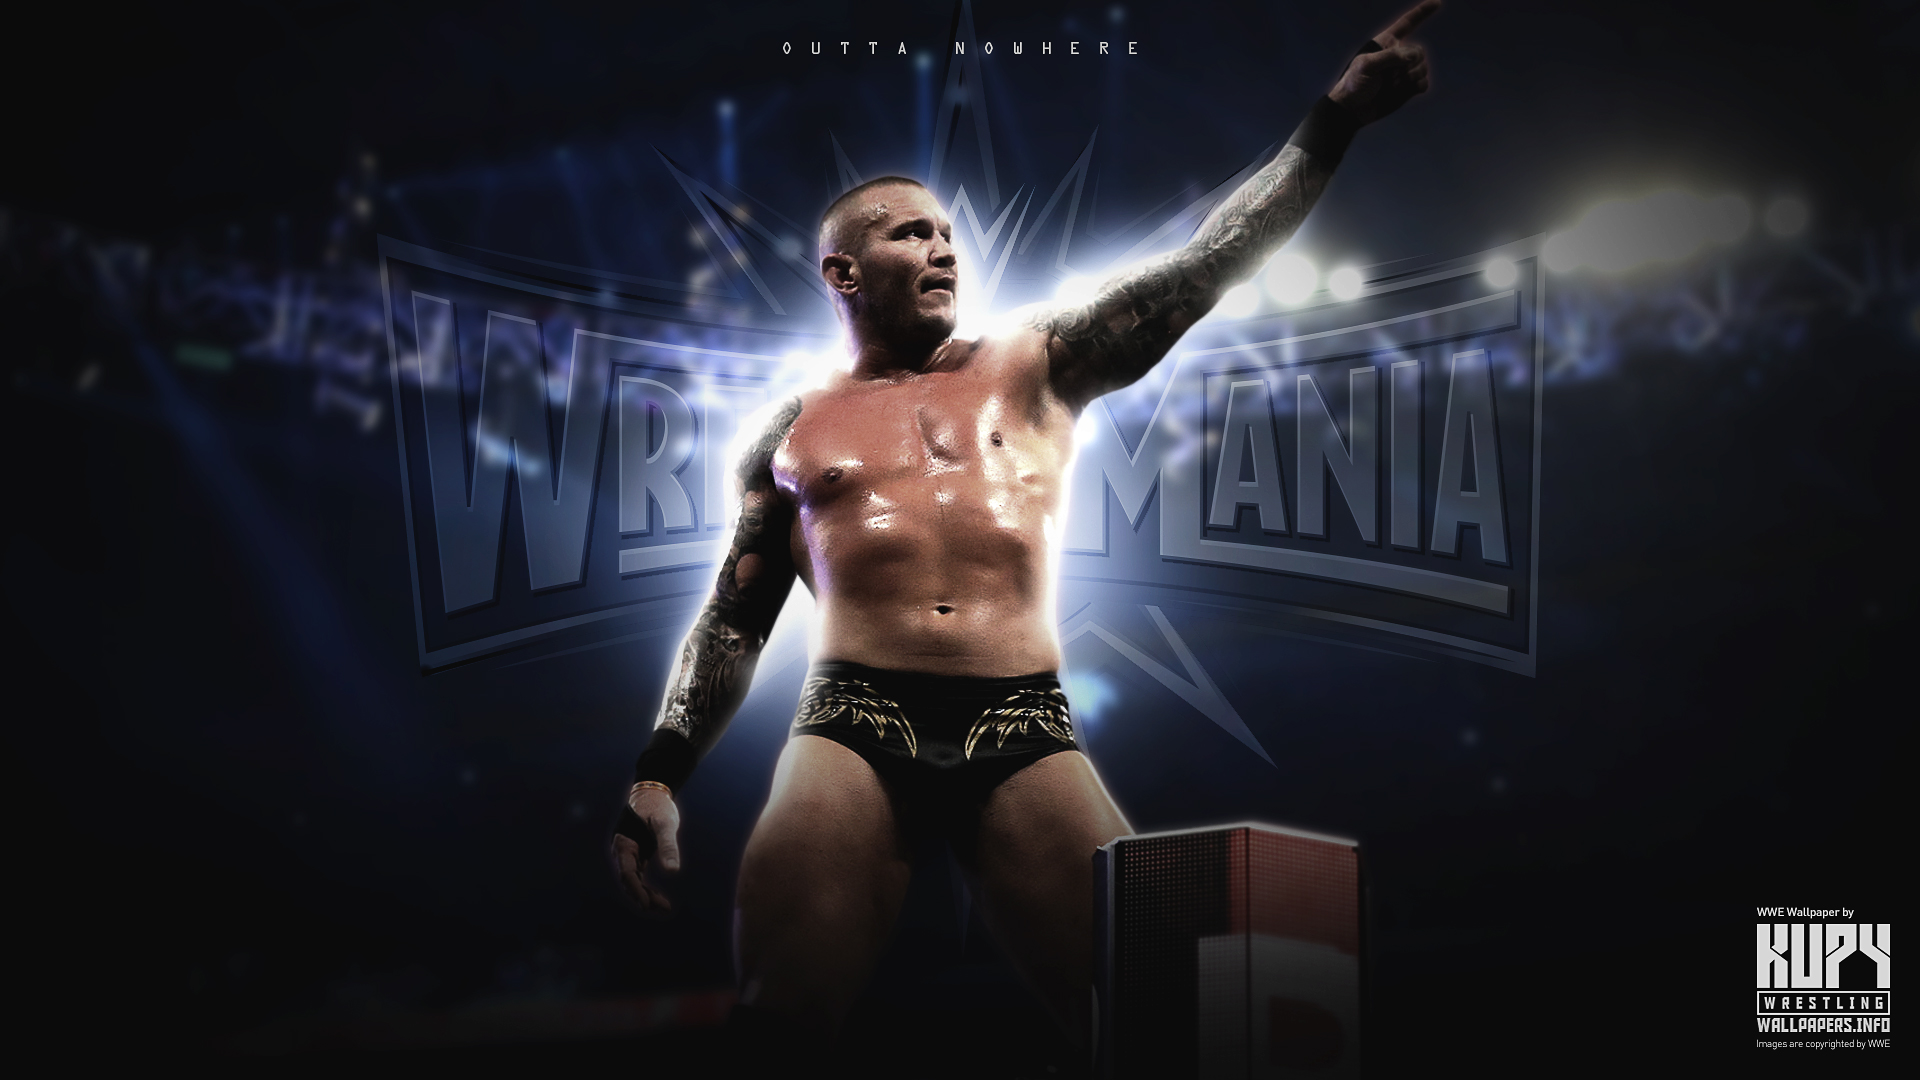 NEW Road to WrestleMania 33: Randy Orton 2017 Royal Rumble Winner wallpaper!  - Kupy Wrestling Wallpapers